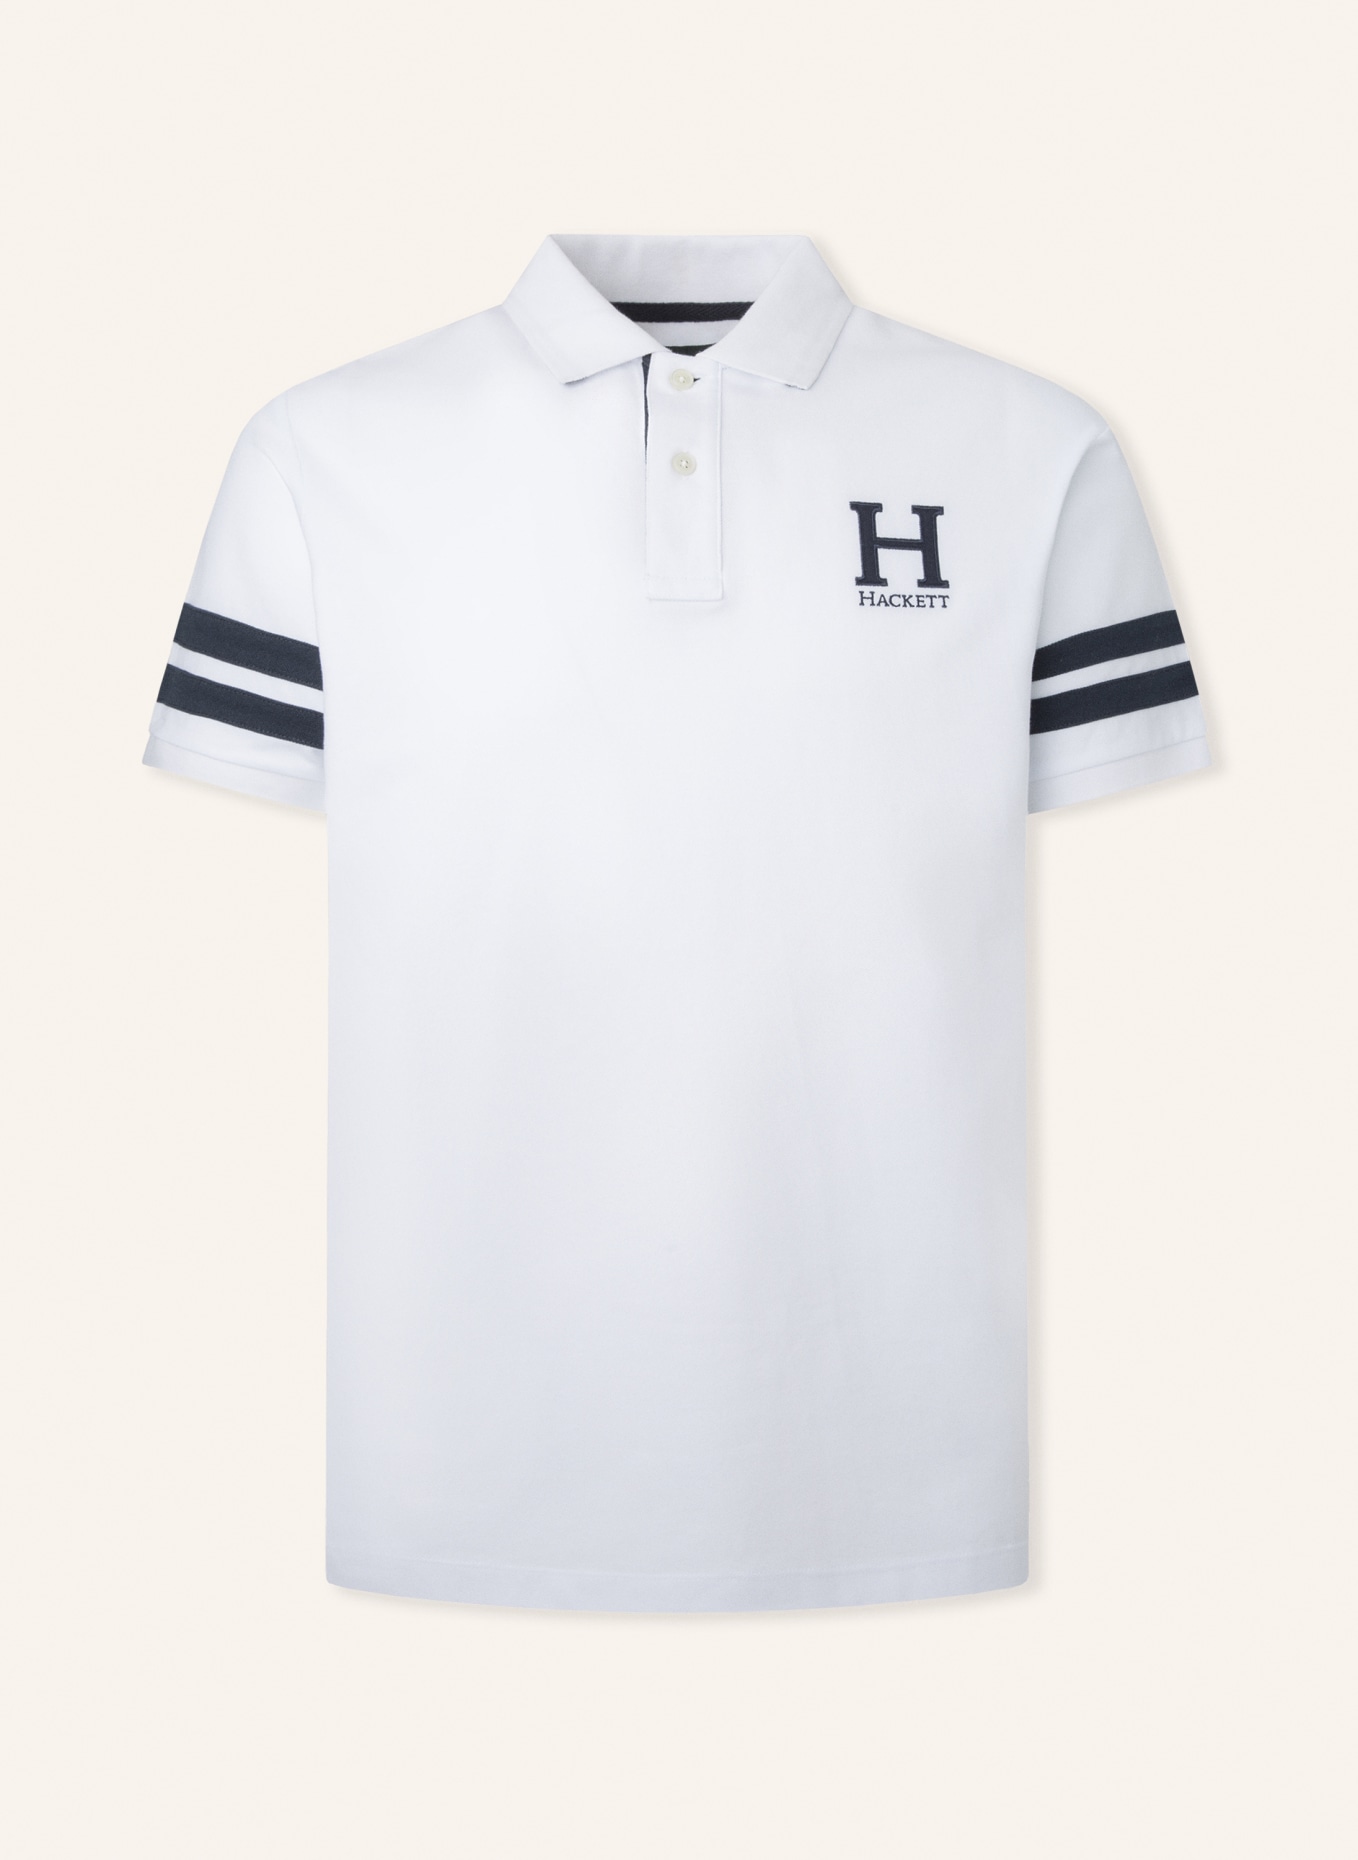 HACKETT LONDON Poloshirt HERITAGE H STR SLV, Farbe: WEISS (Bild 1)